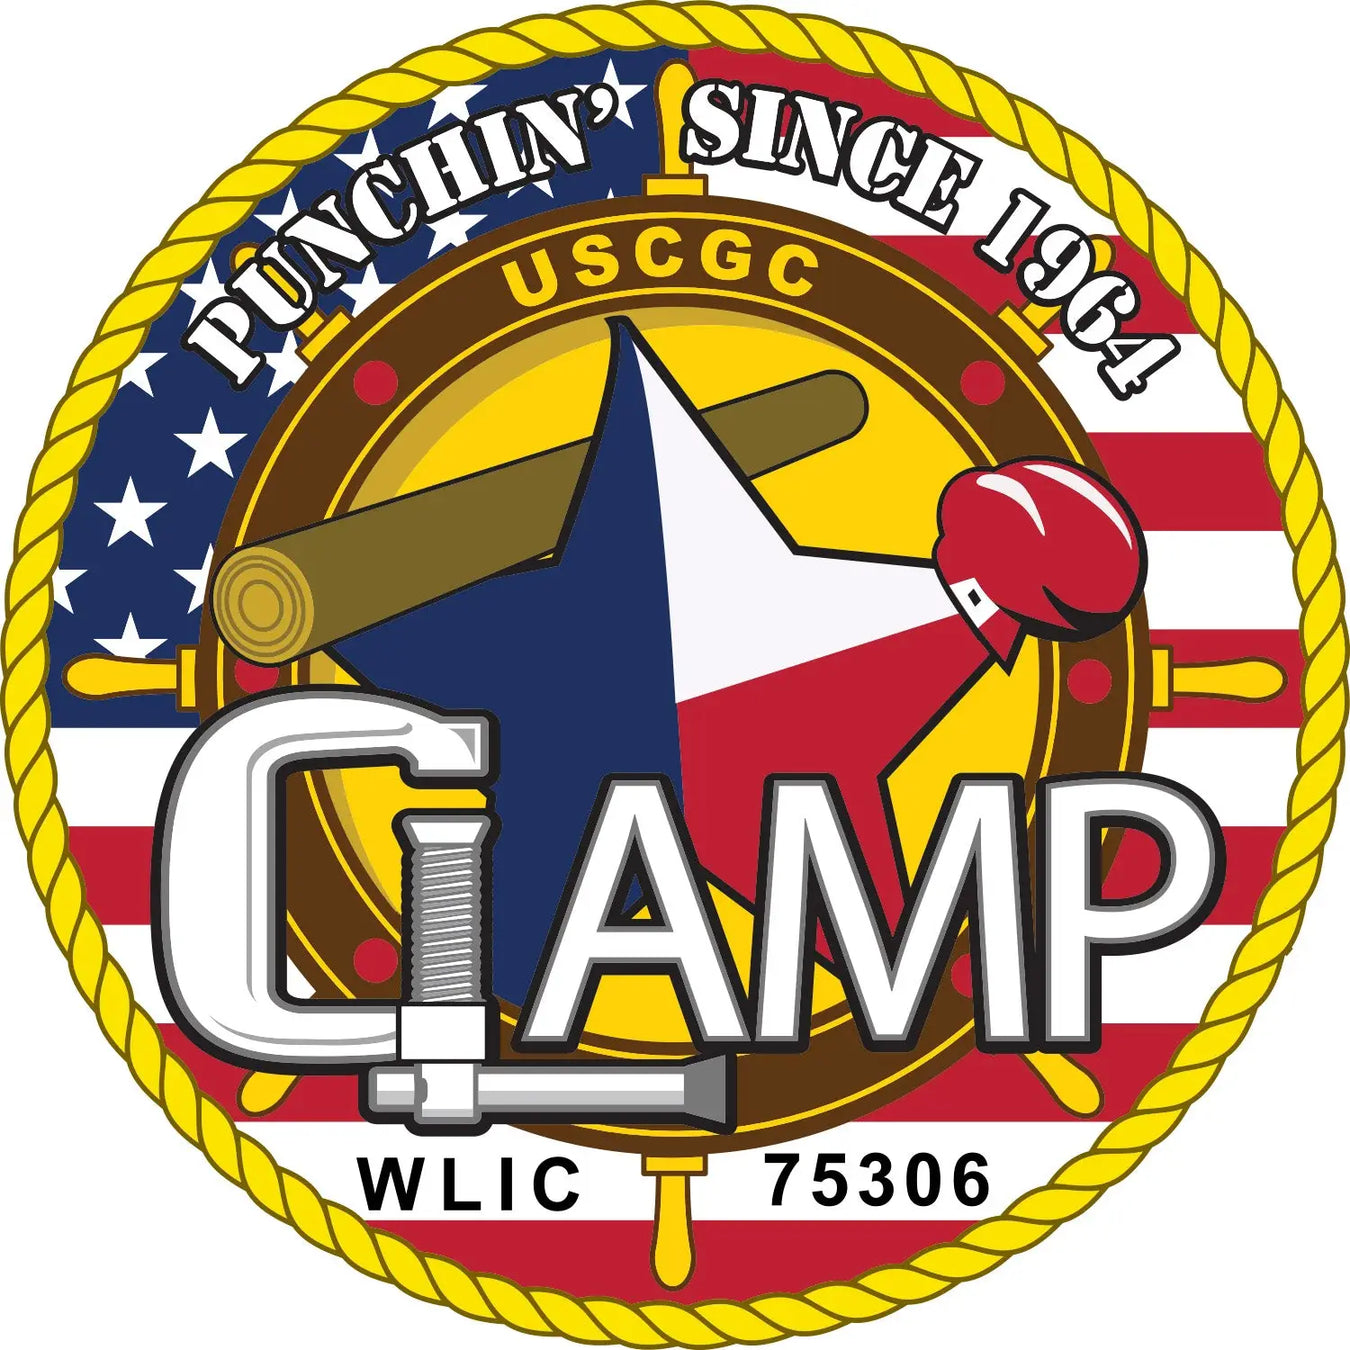 USCGC Clamp (WLIC-75306)